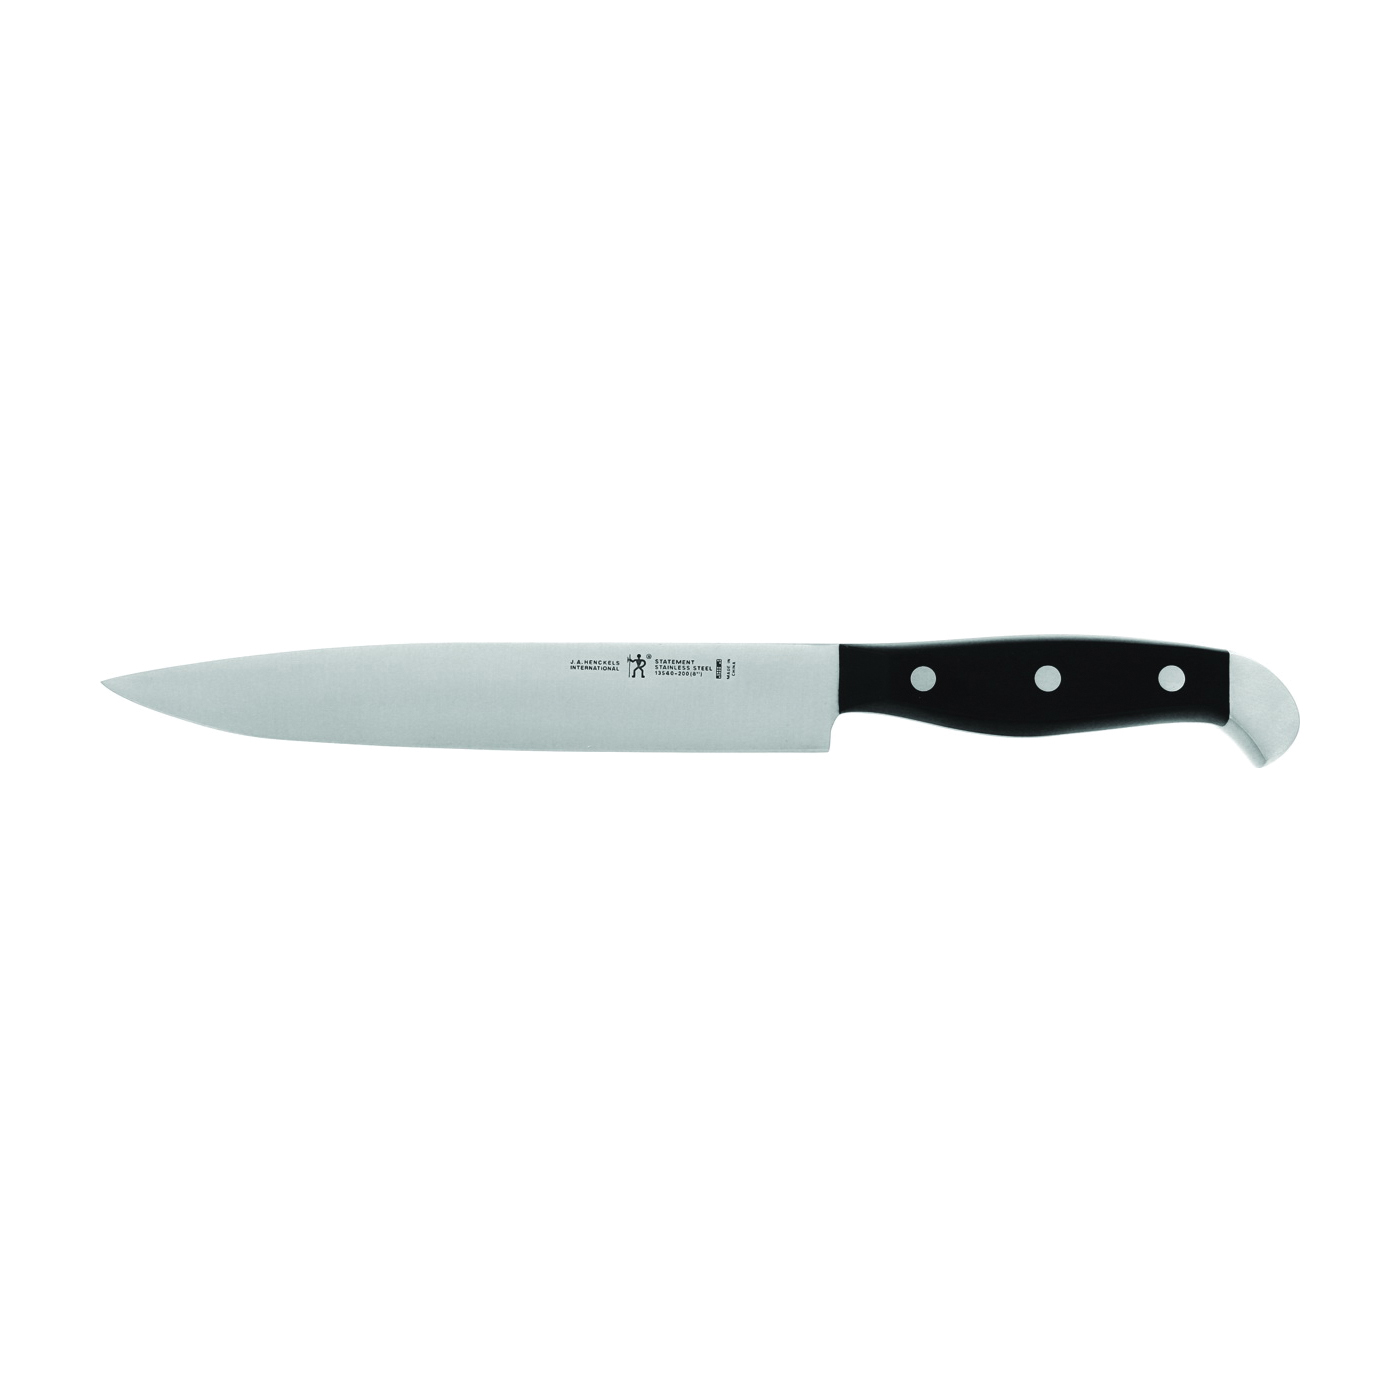 Statement Series 13540-133 Utility Knife, Stainless Steel Blade, Black Handle, Serrated Blade